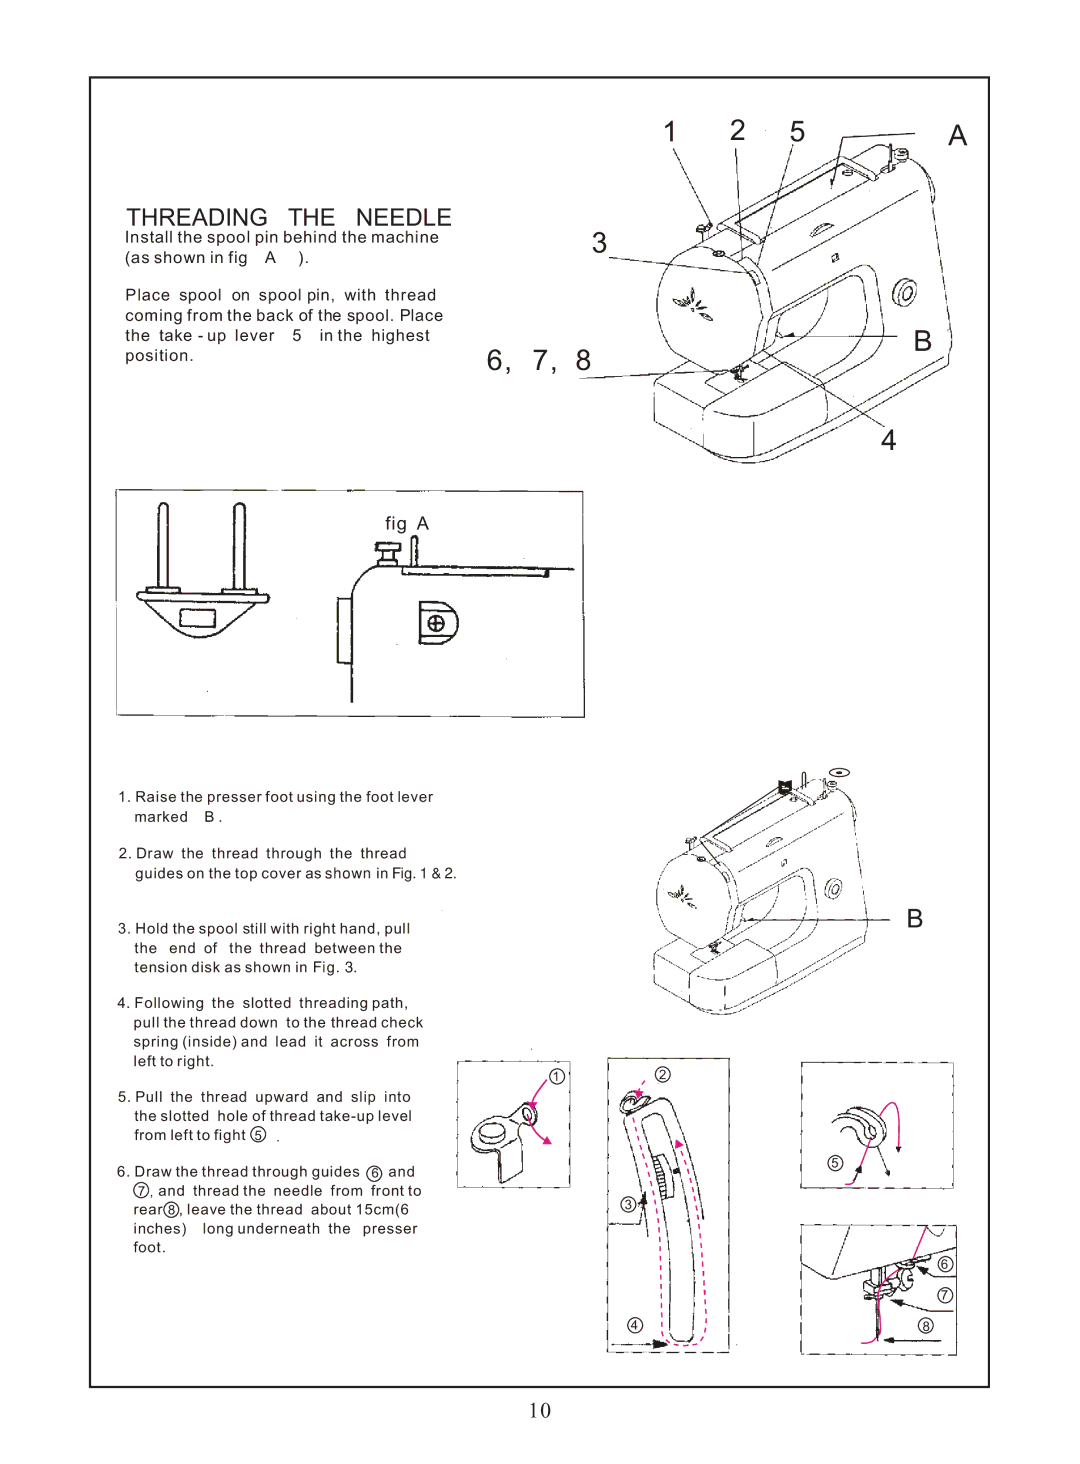 Euro-Pro 372H instruction manual Threading Needle, Fig a 